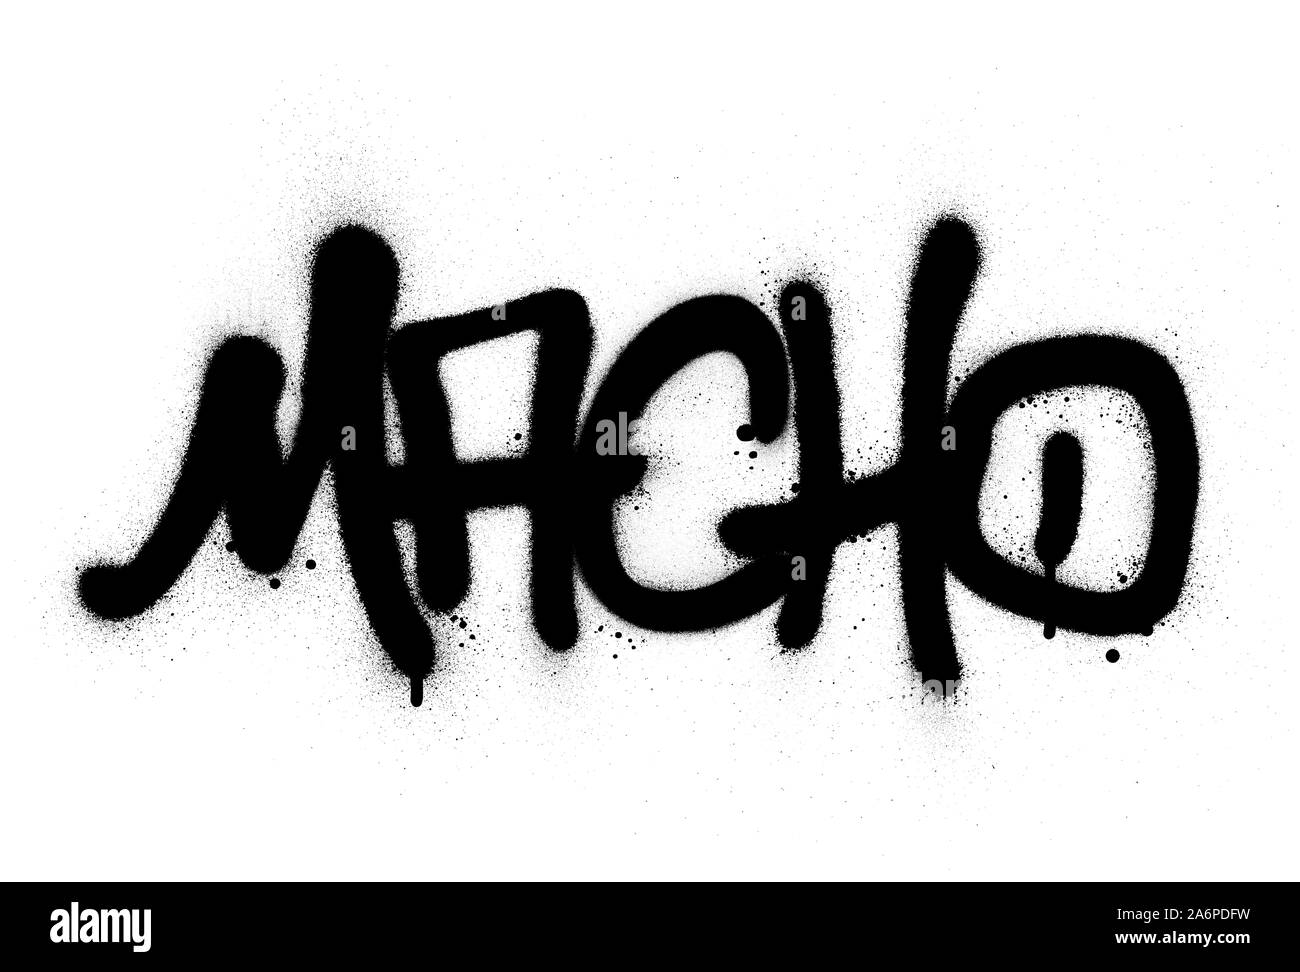 graffiti macho word sprayed in black over white Stock Vector